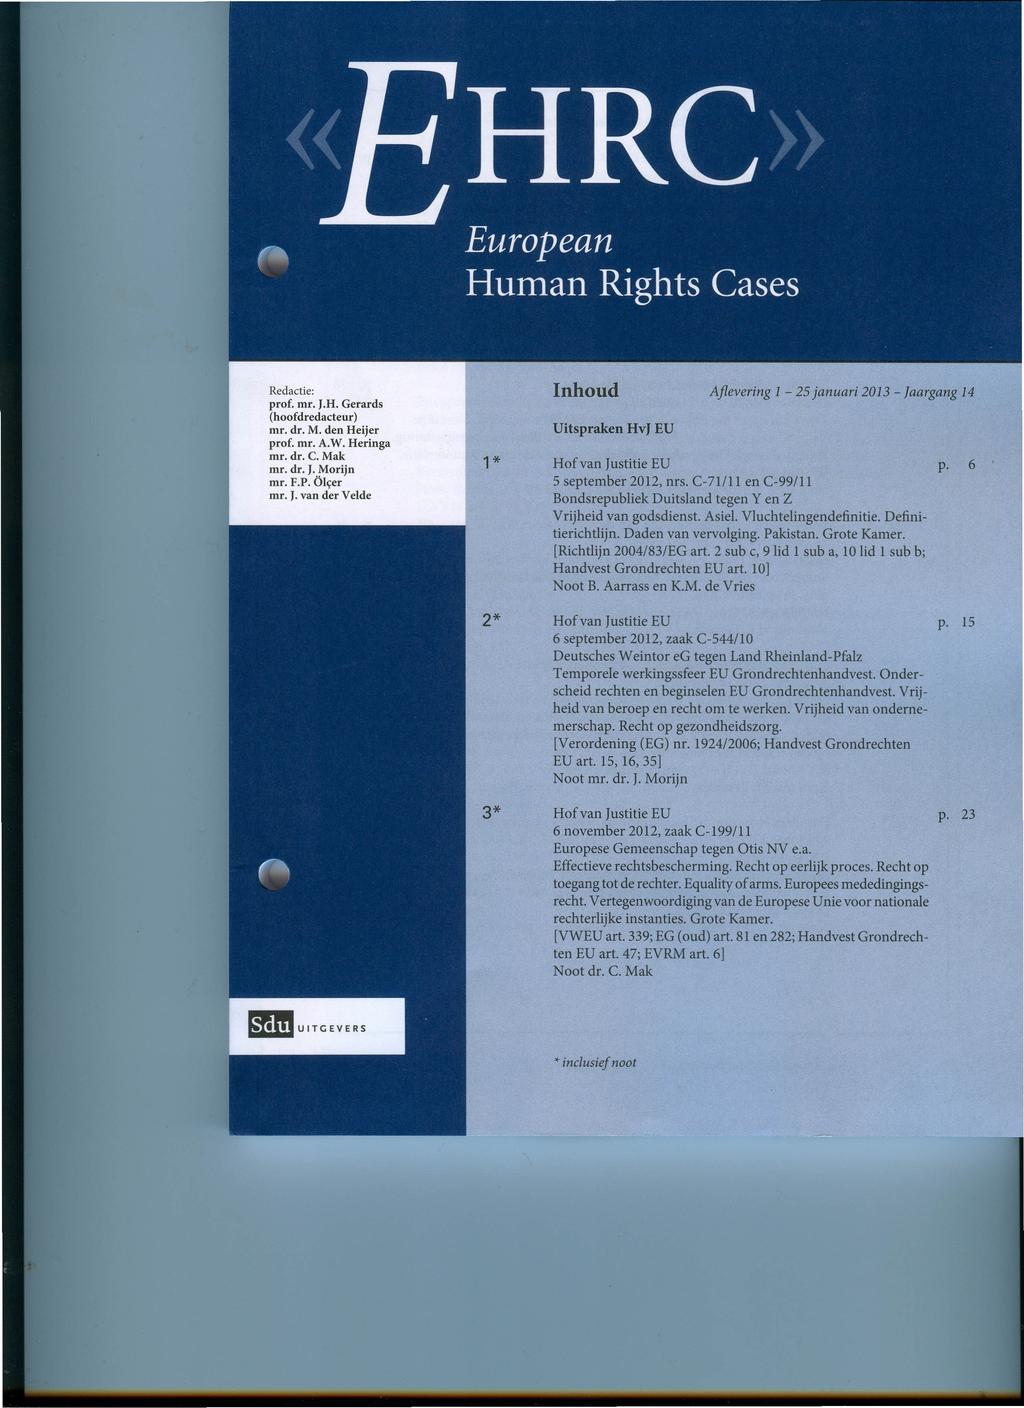 Redactie: prof. mr. J.H. Gerards (hoofdredacteur) mr. dr. M. den Heijer prof. mr. A.W. Heringa mr. dr. C. Mak mr. dr. J. Morijn mr. F.P. Ölçer mr. J. van der Velde Uitspraken Aflevering 1-25 januari 2013 - Jaargang 14 HvJ EU 1* Hof van Justitie EU 5 september 2012, nrs.